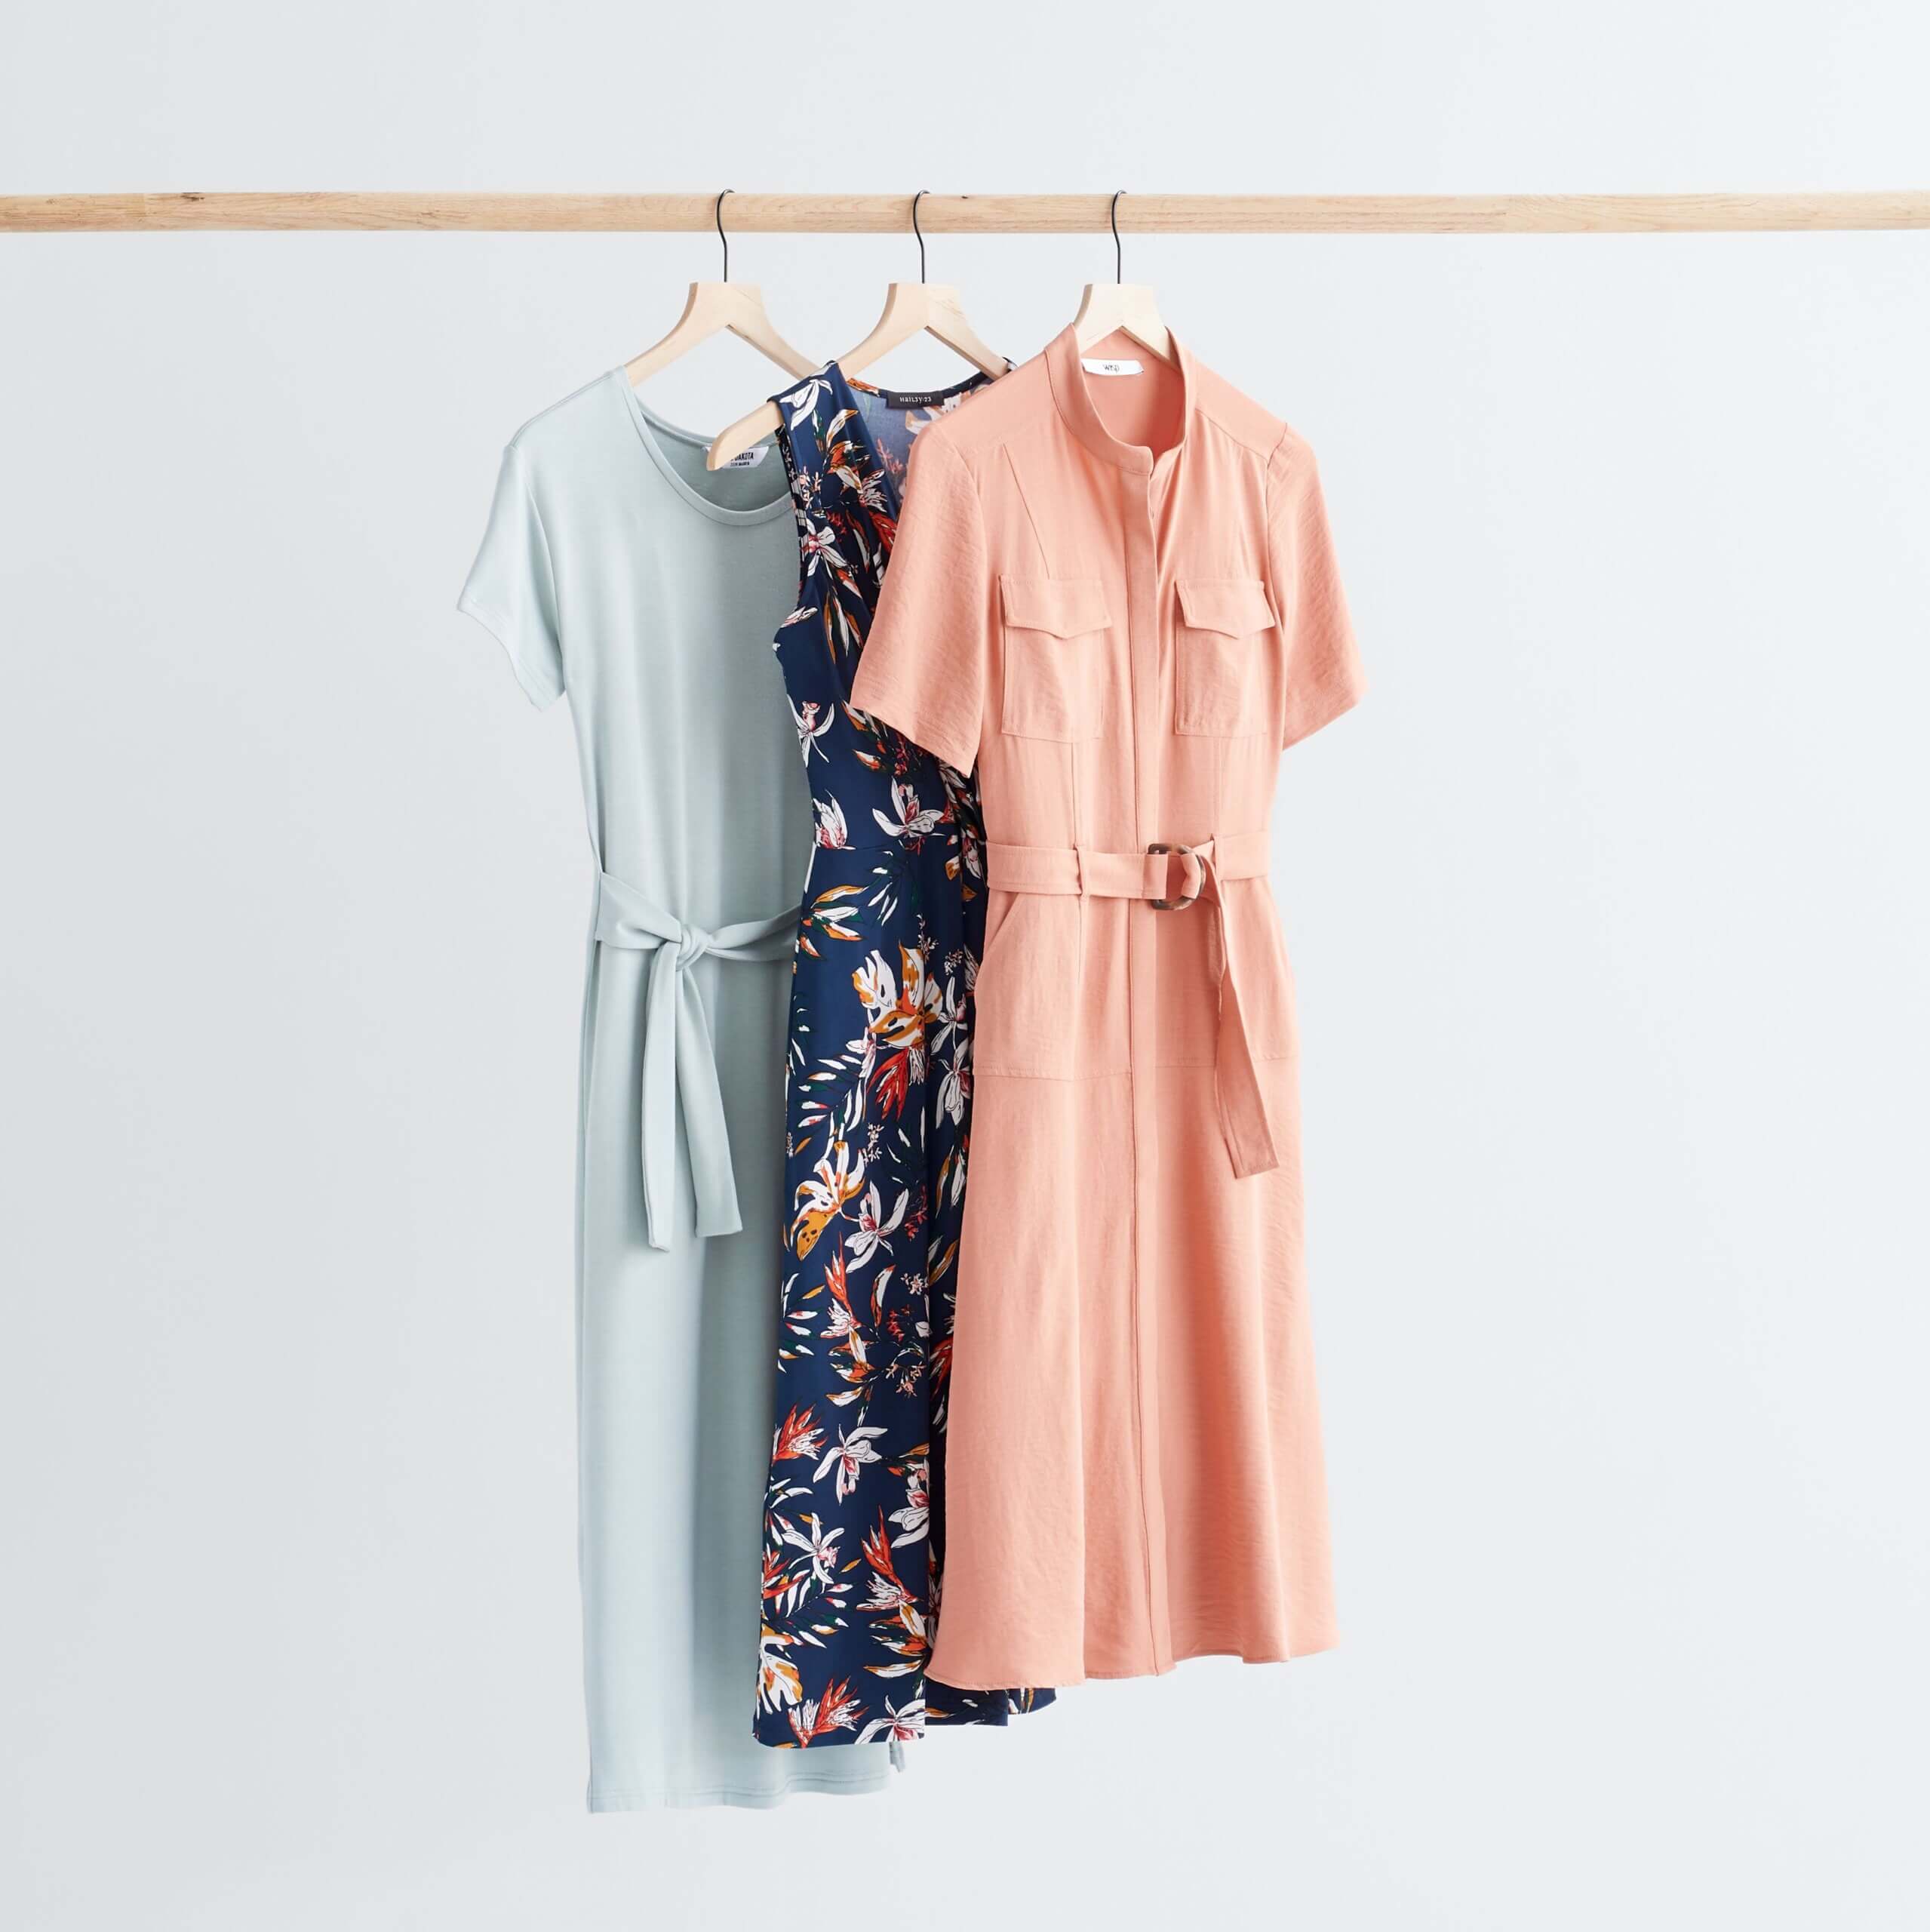 Stitch Fix Women’s rack image featuring pink shirt dress, navy floral dress and baby blue tie-waist dress hanging on wooden rack.